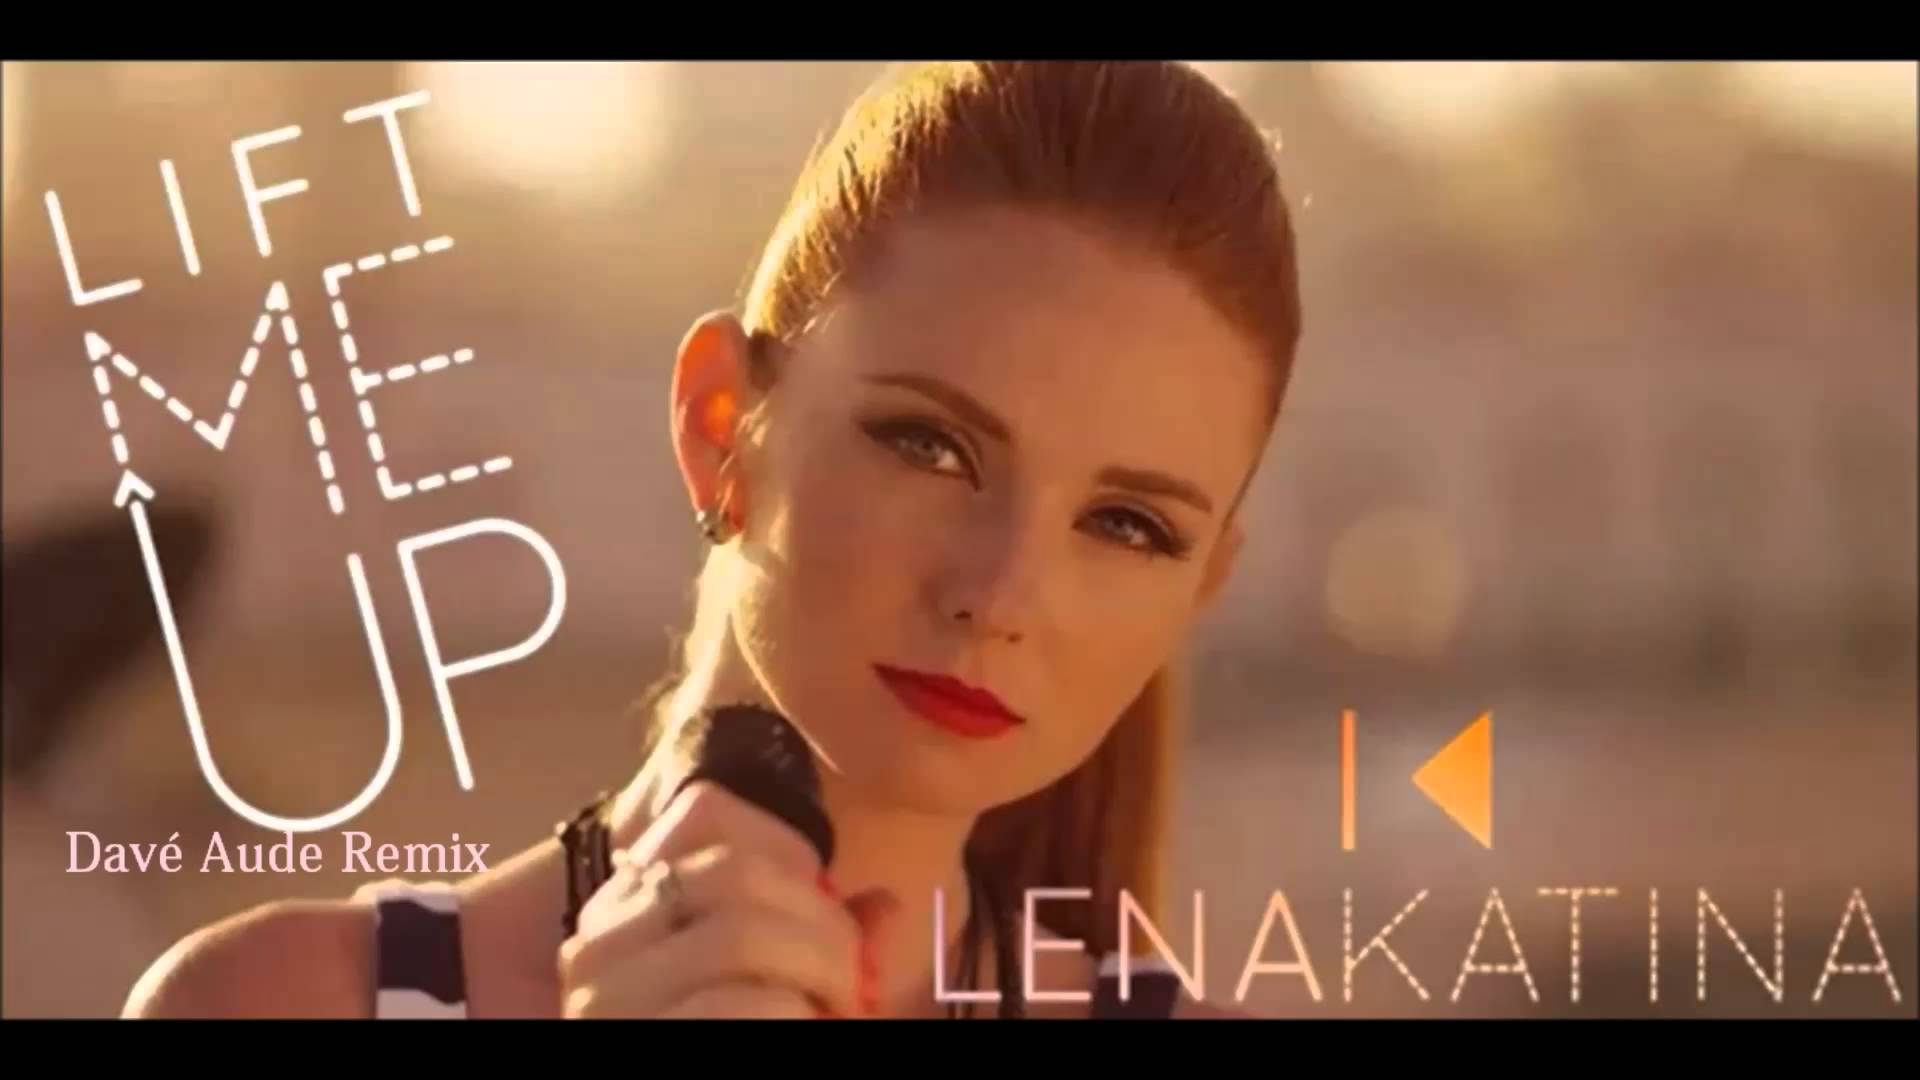 Lena Katina (t.A.T.u.) - Lift Me Up Dave Audé Remix - YouTube